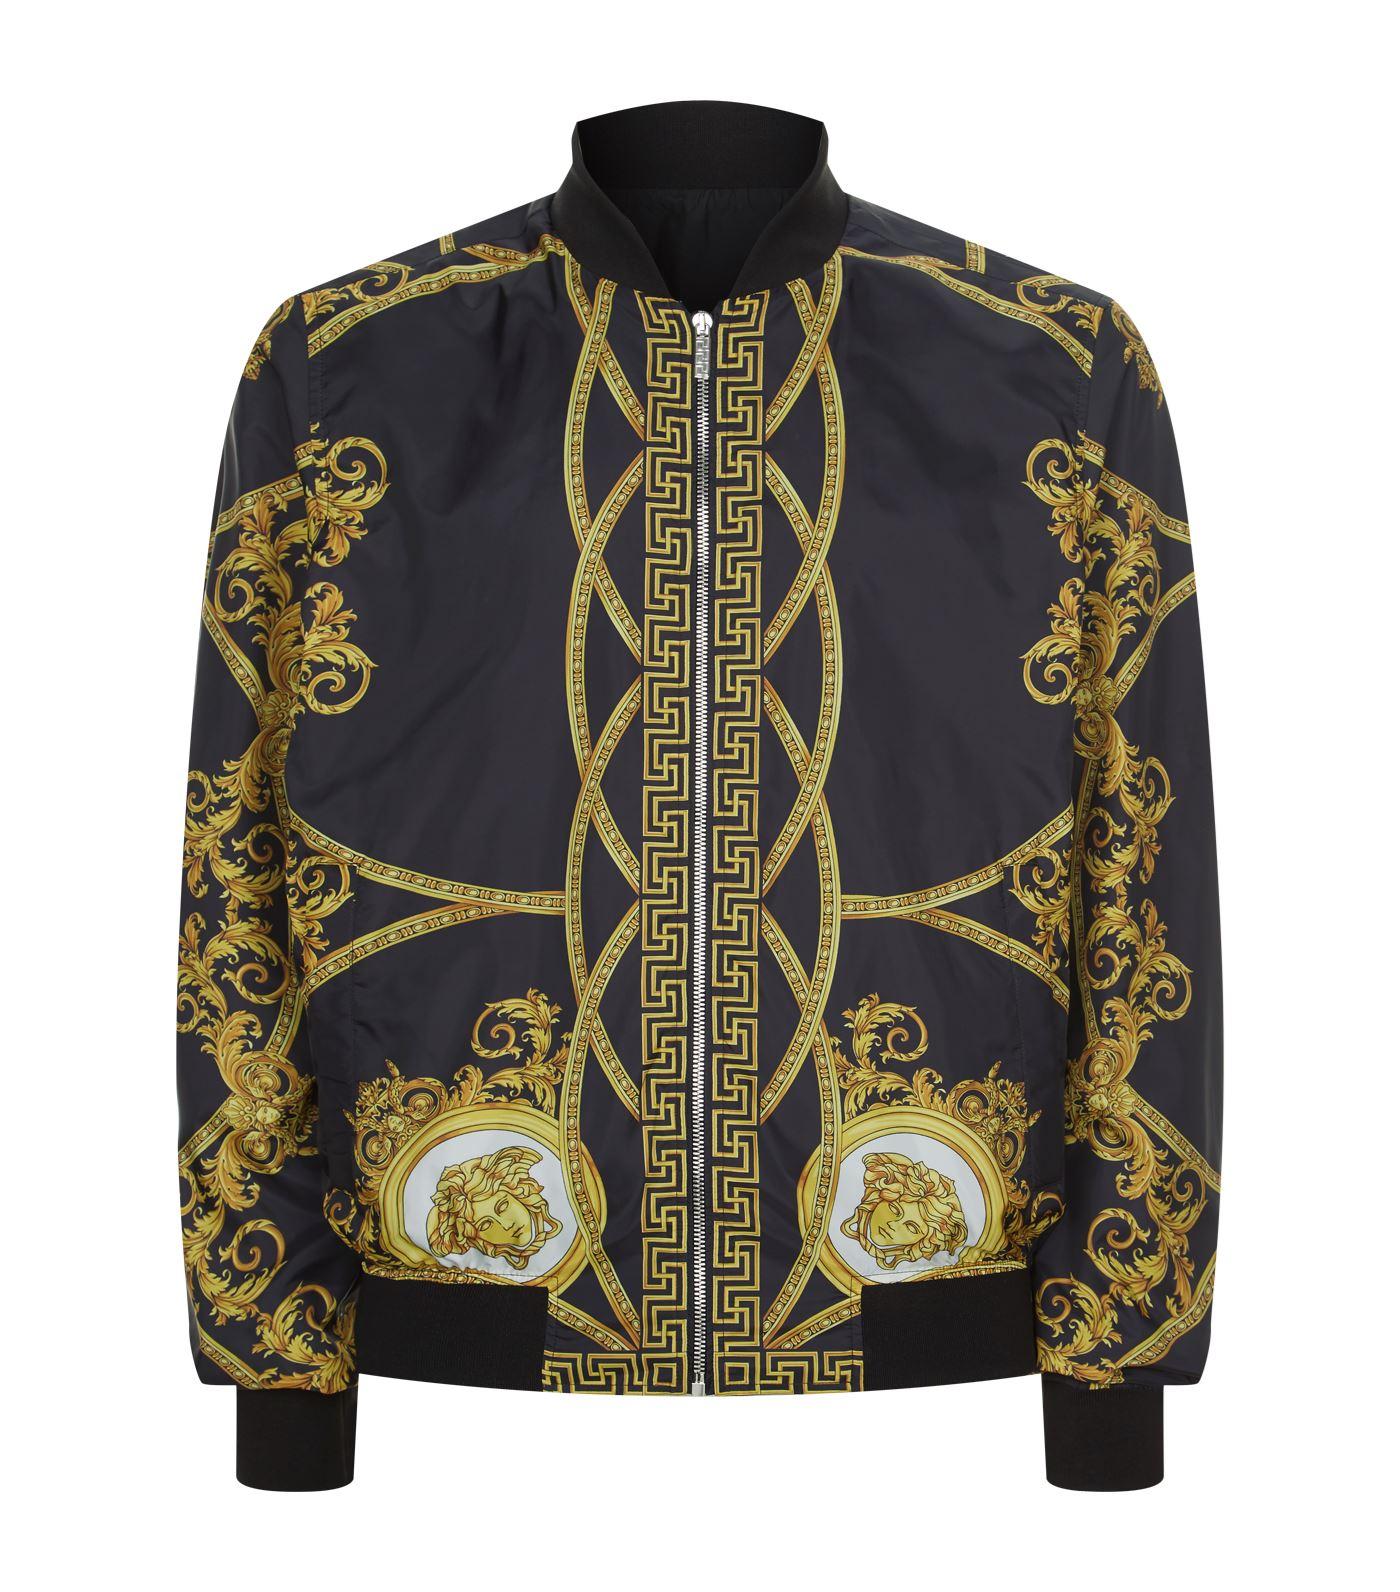 Versace Reversible Printed Bomber Jacket in Metallic for Men - Lyst